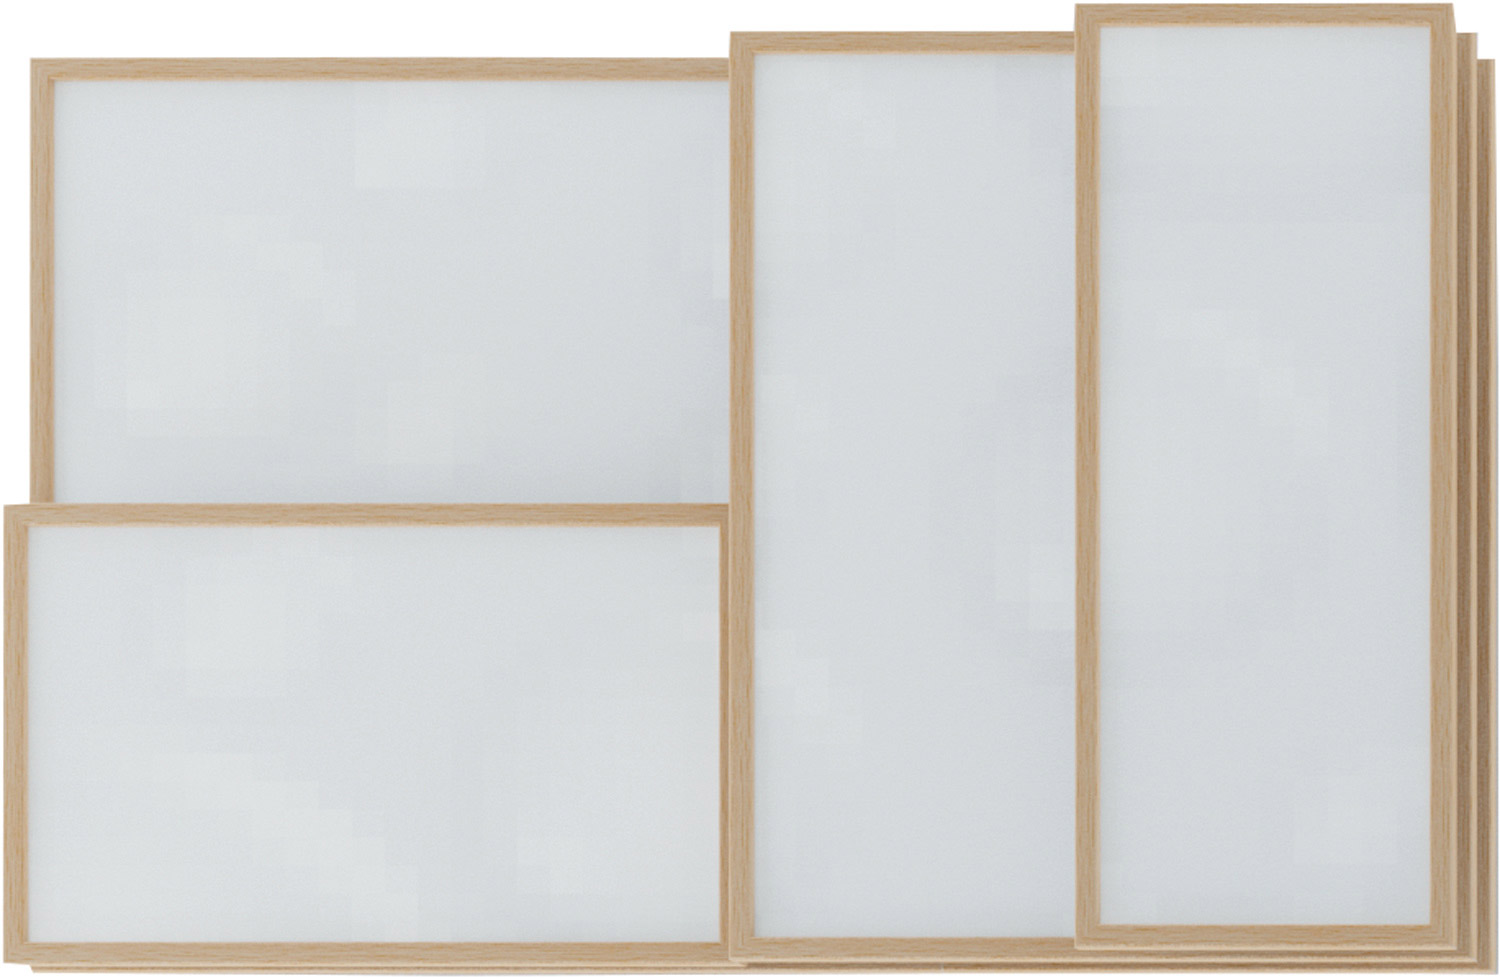 Whiteboard 50 x 80 cm